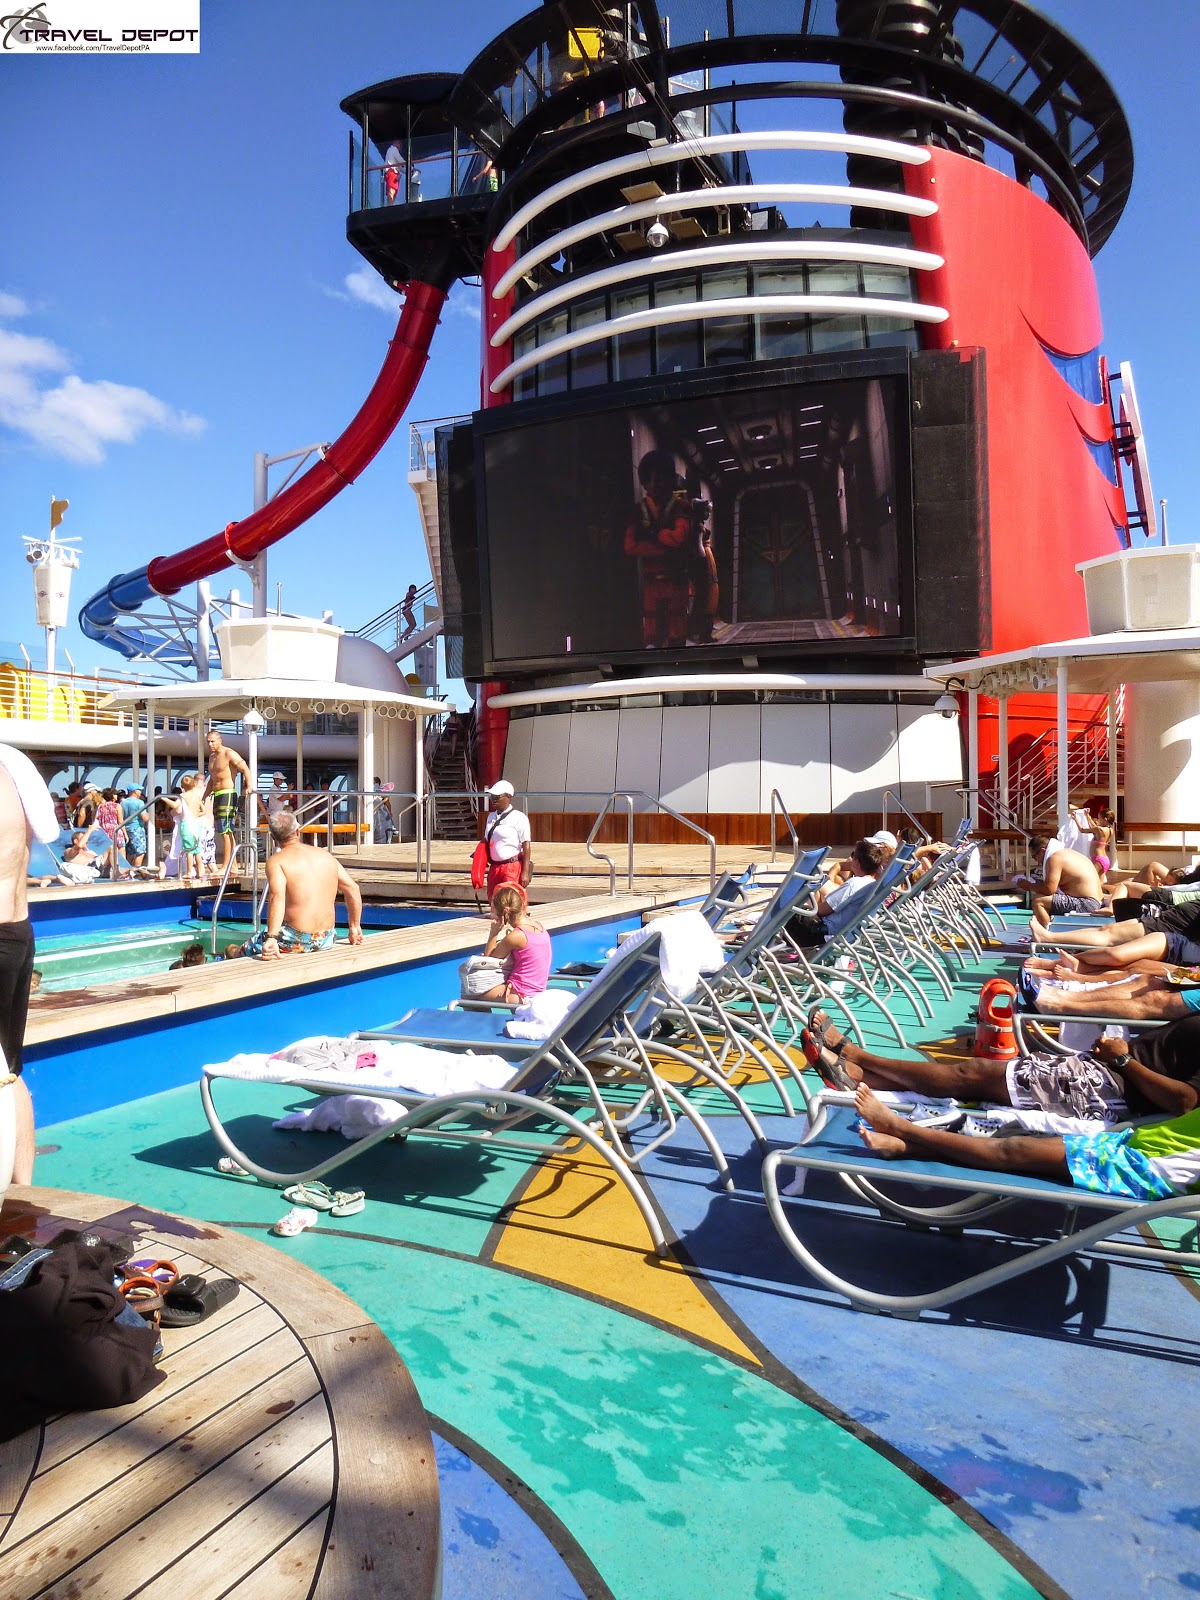 Pool areas aboard the Disney Magic Cruise Ship  Travel Depot